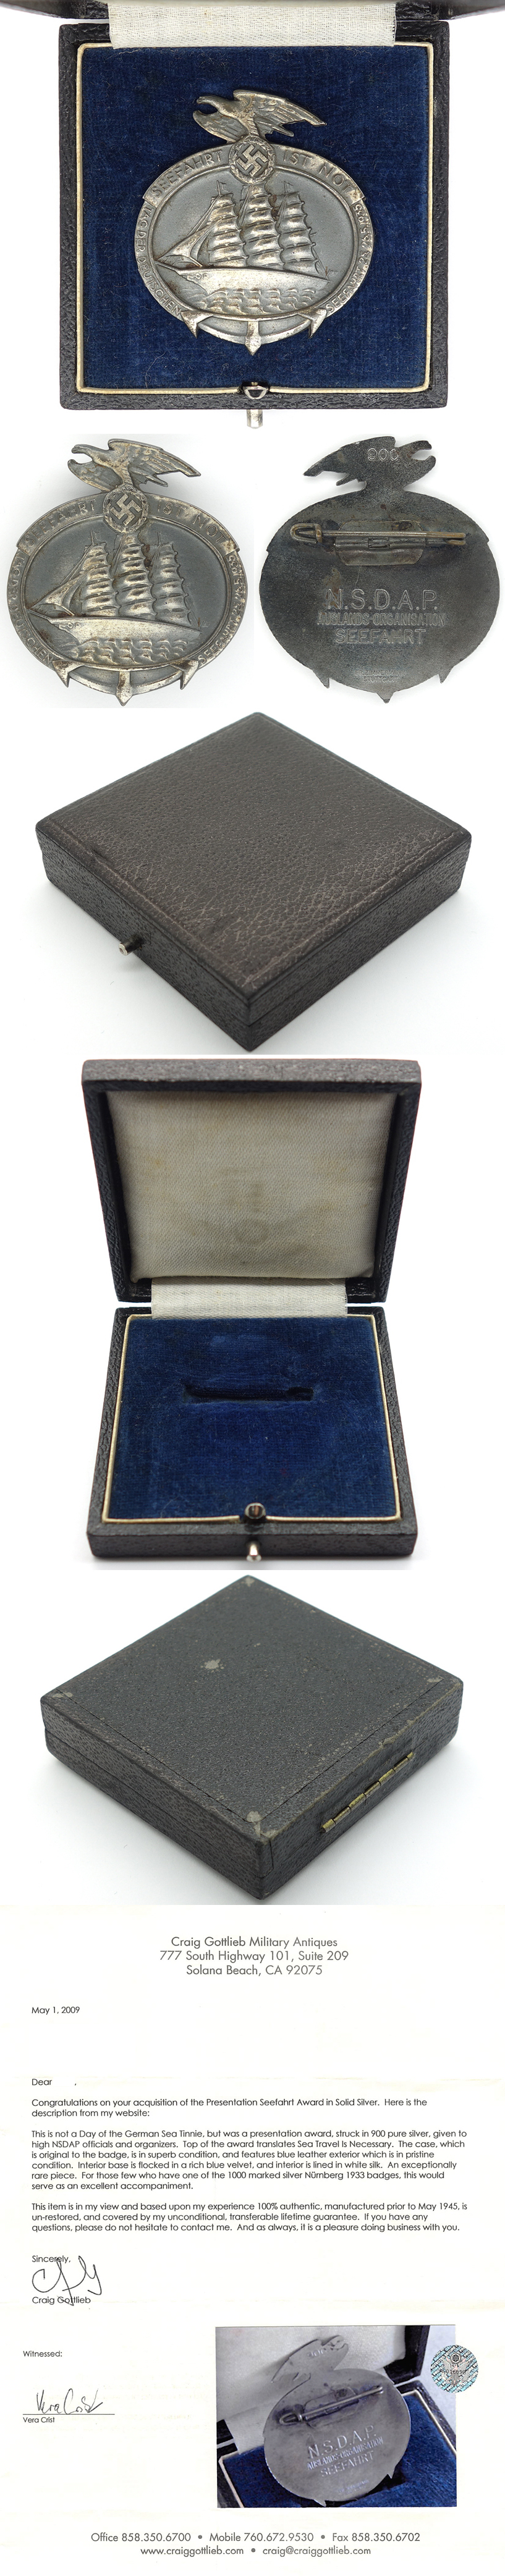 Cased Presentation “Seefahrt Ist Not” Award in 900 Silver